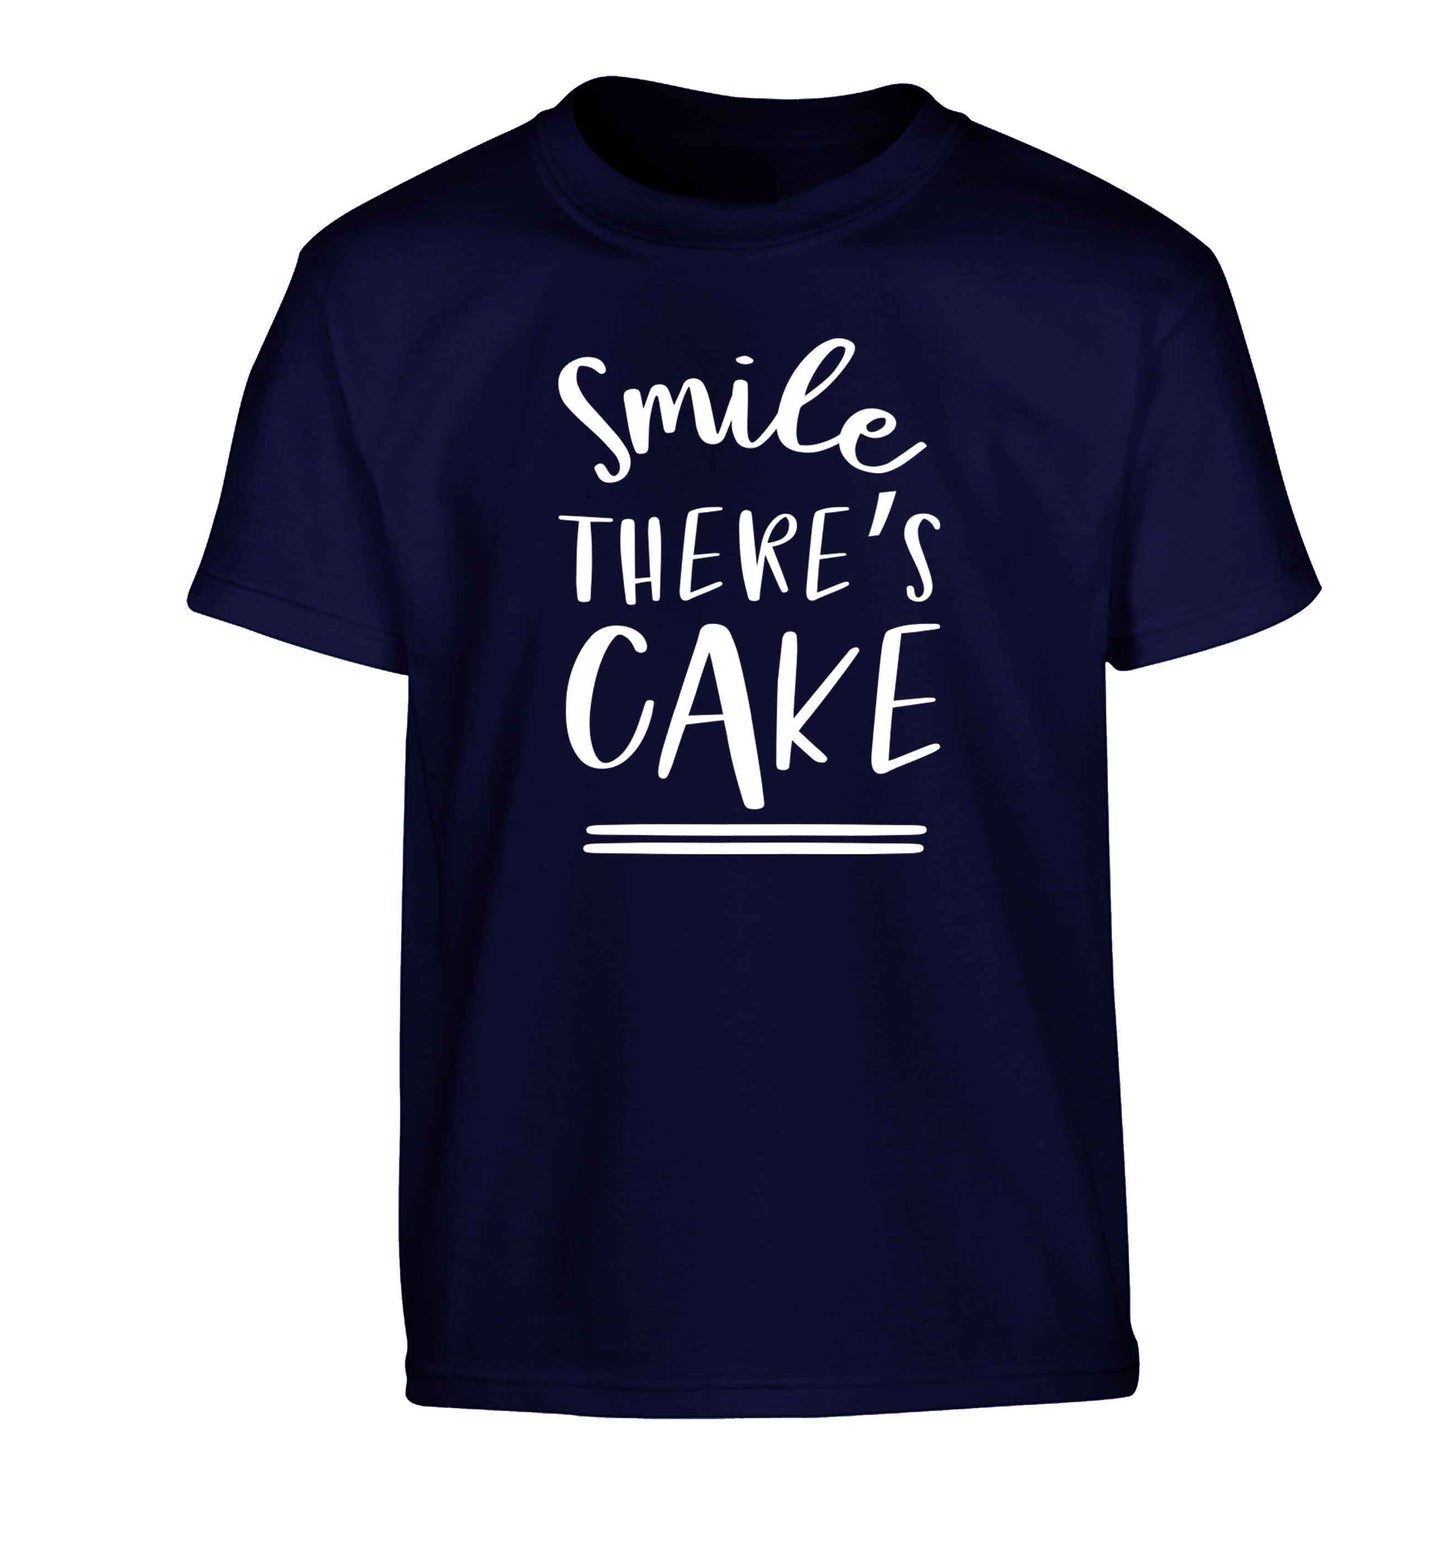 Smile there's cake Children's navy Tshirt 12-13 Years